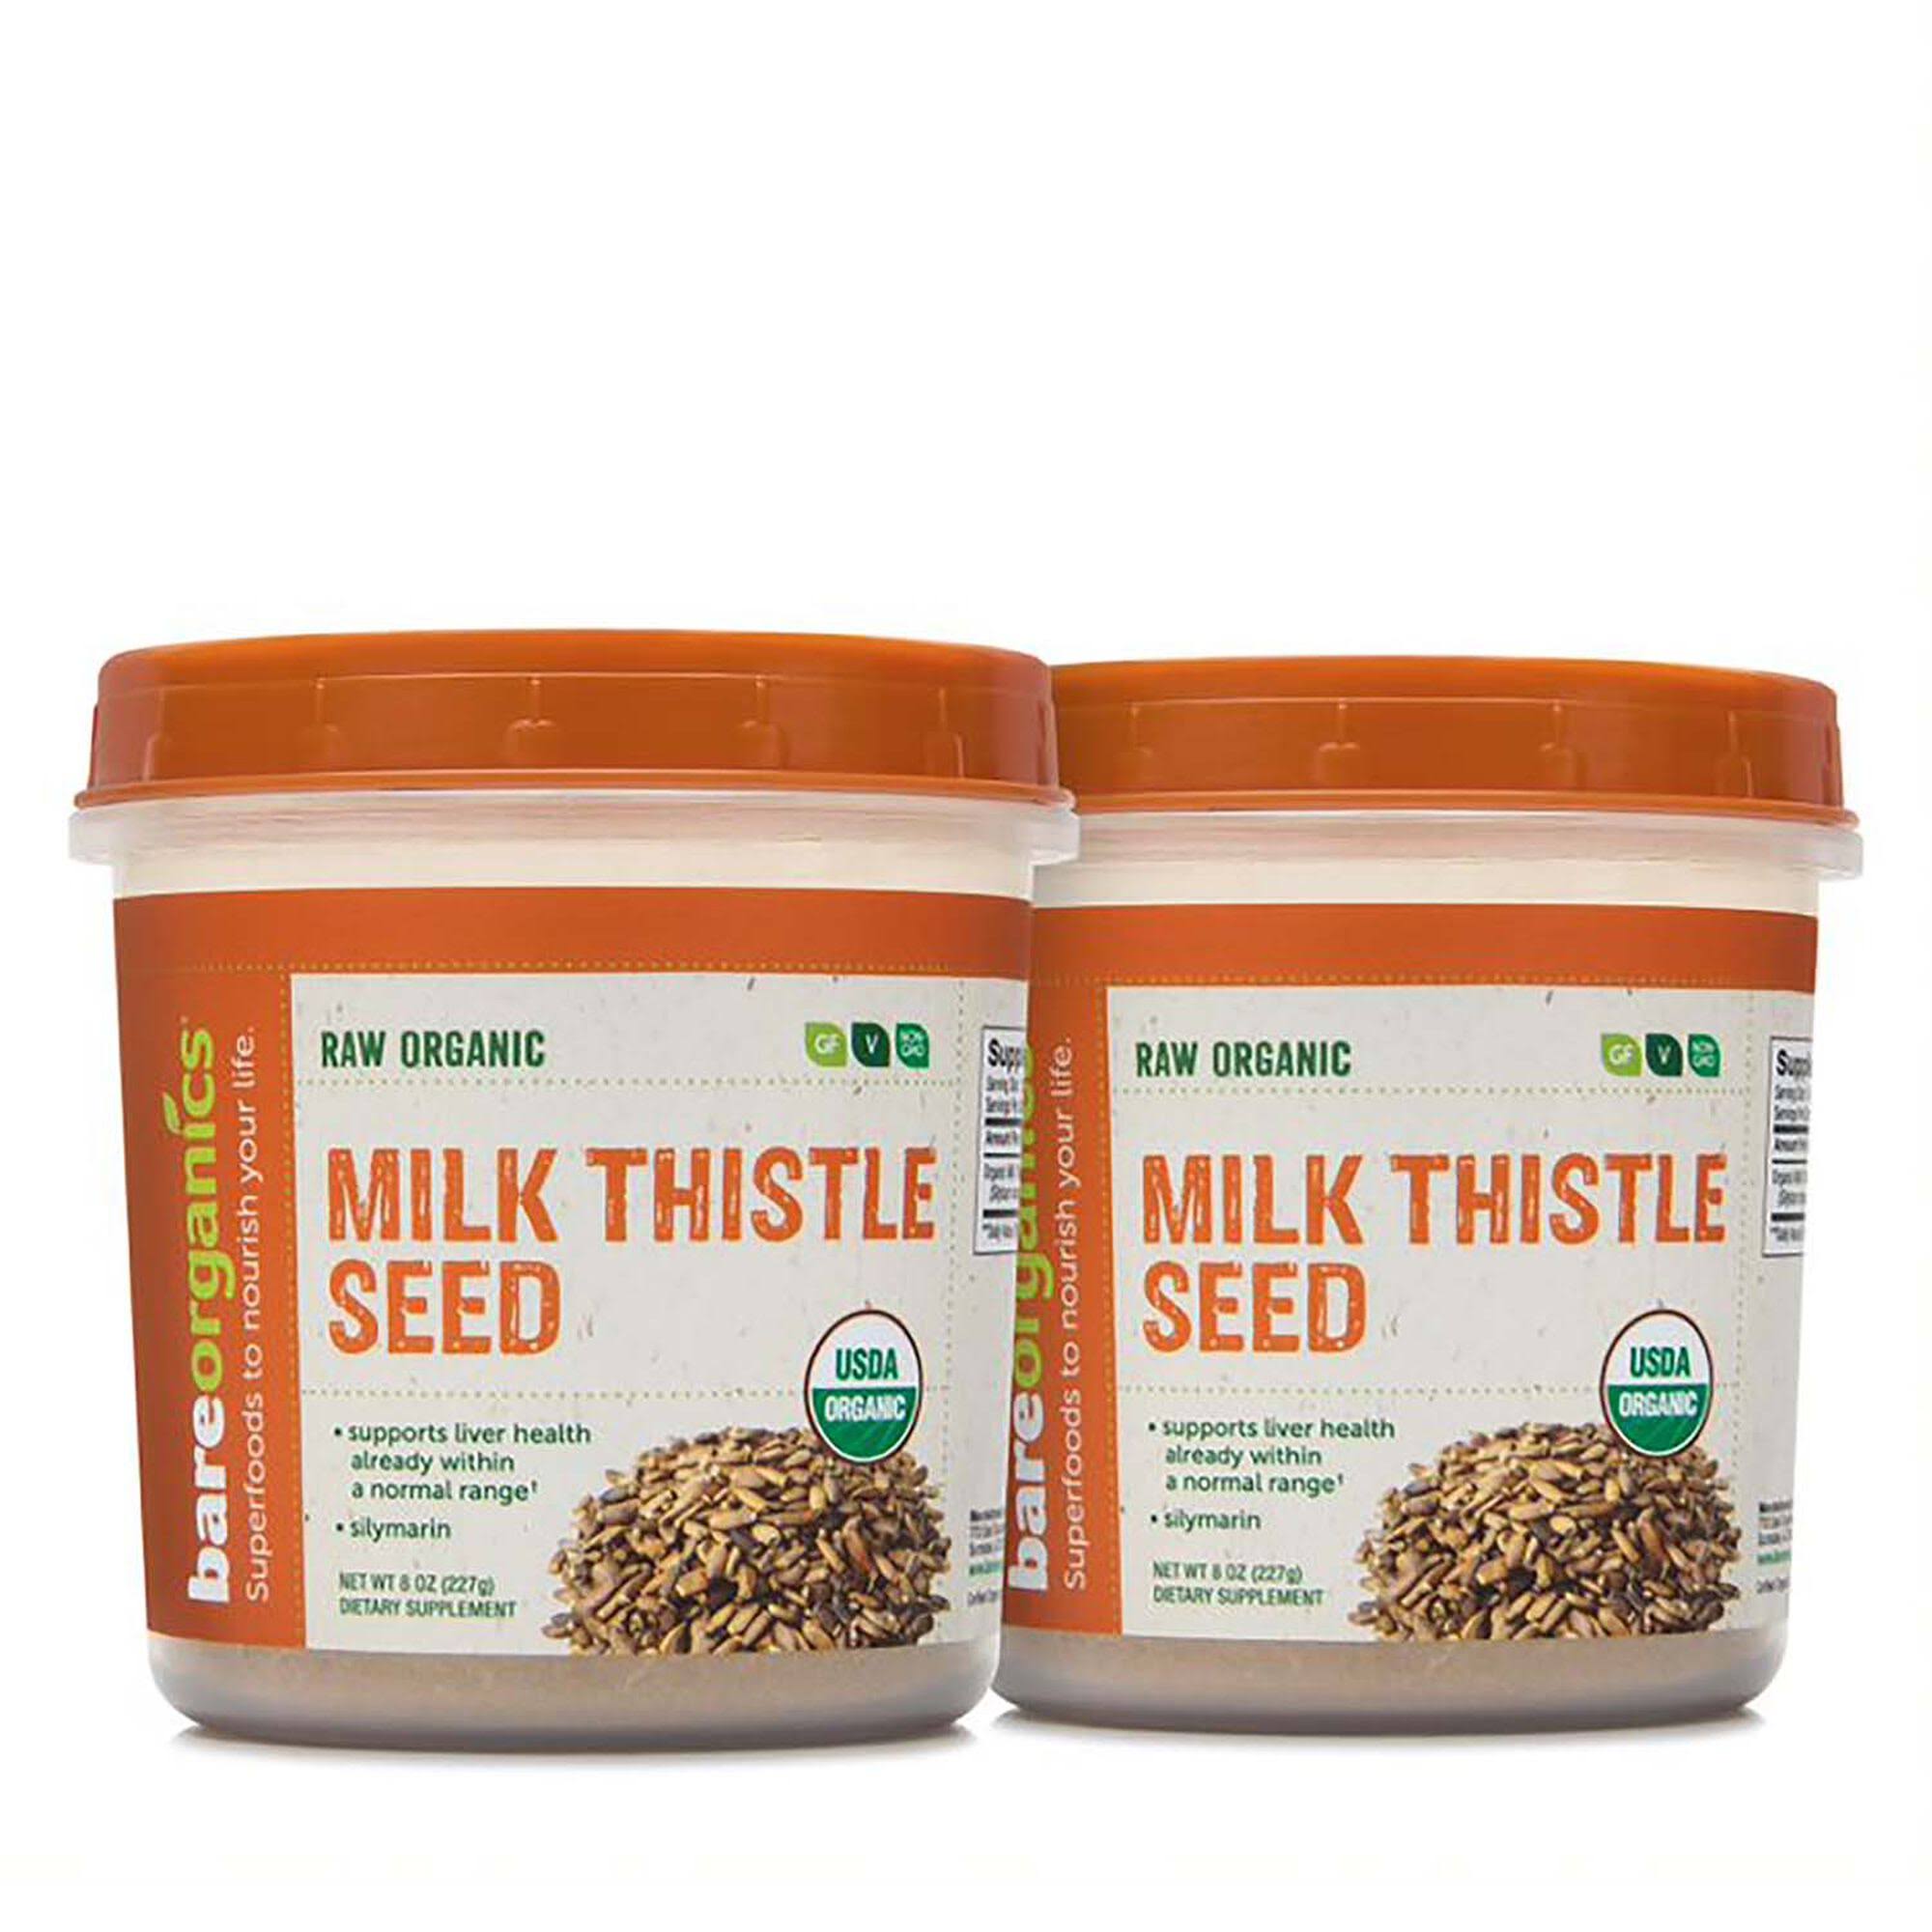 Bareorganics Milk Thistle Seed Powder 8 oz - Raw / Organic